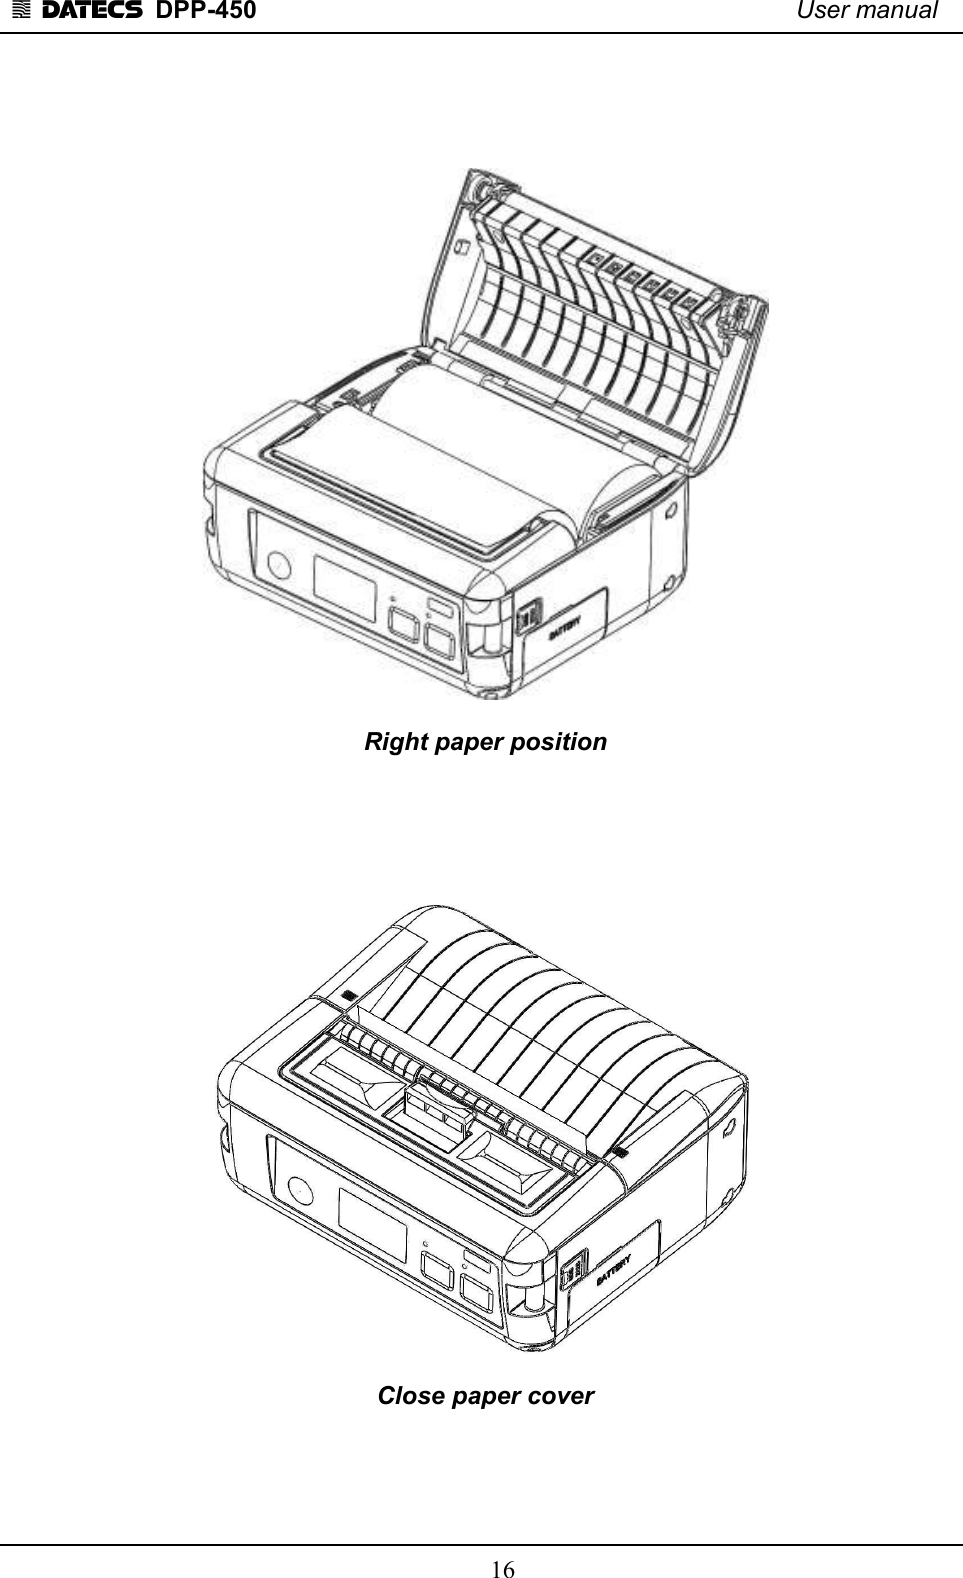 1 DATECS  DPP-450    User manual     16       Right paper position        Close paper cover     